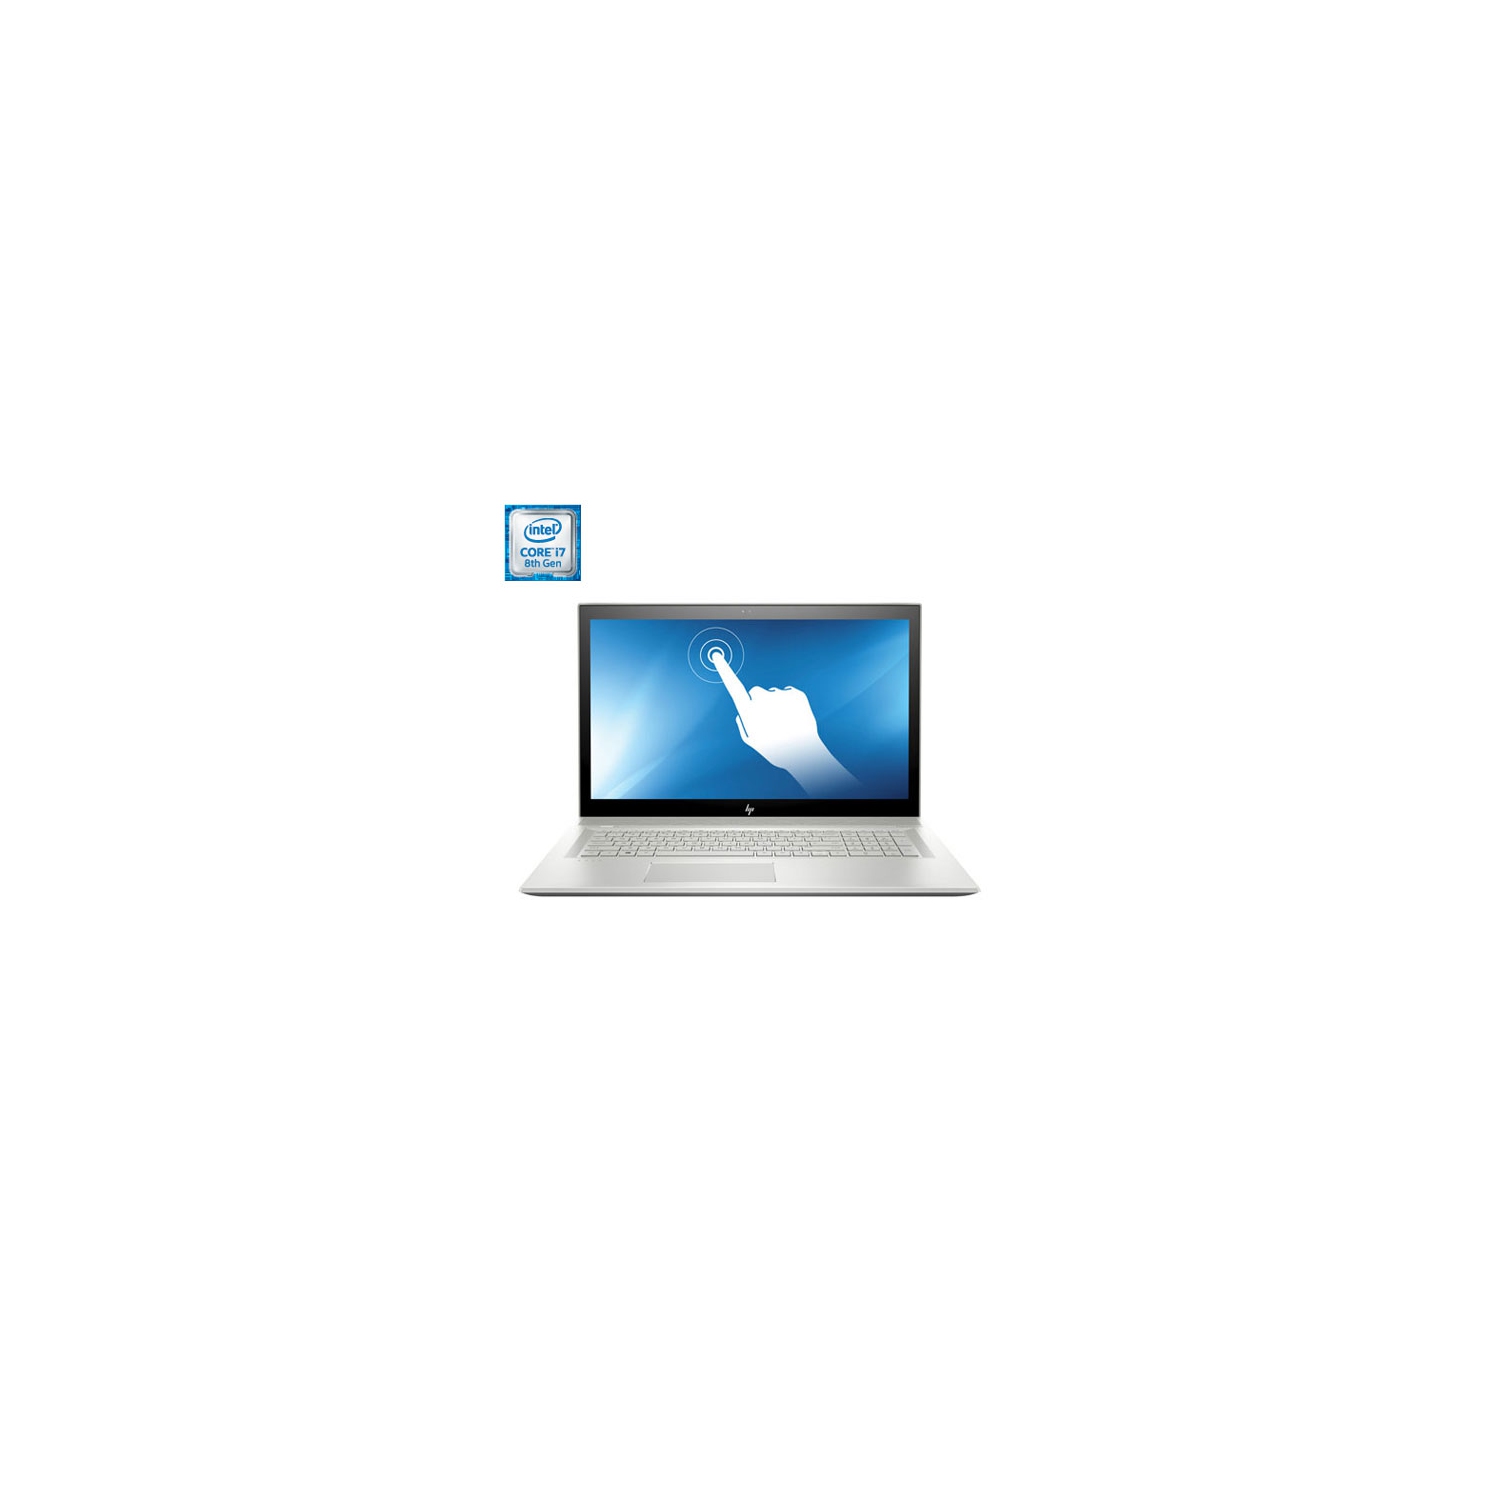 Refurbished (Good) - HP ENVY 17.3" Touchscreen Laptop - Silver (Intel Core i7-8550U/1TB HDD/12GB RAM/Windows 10)